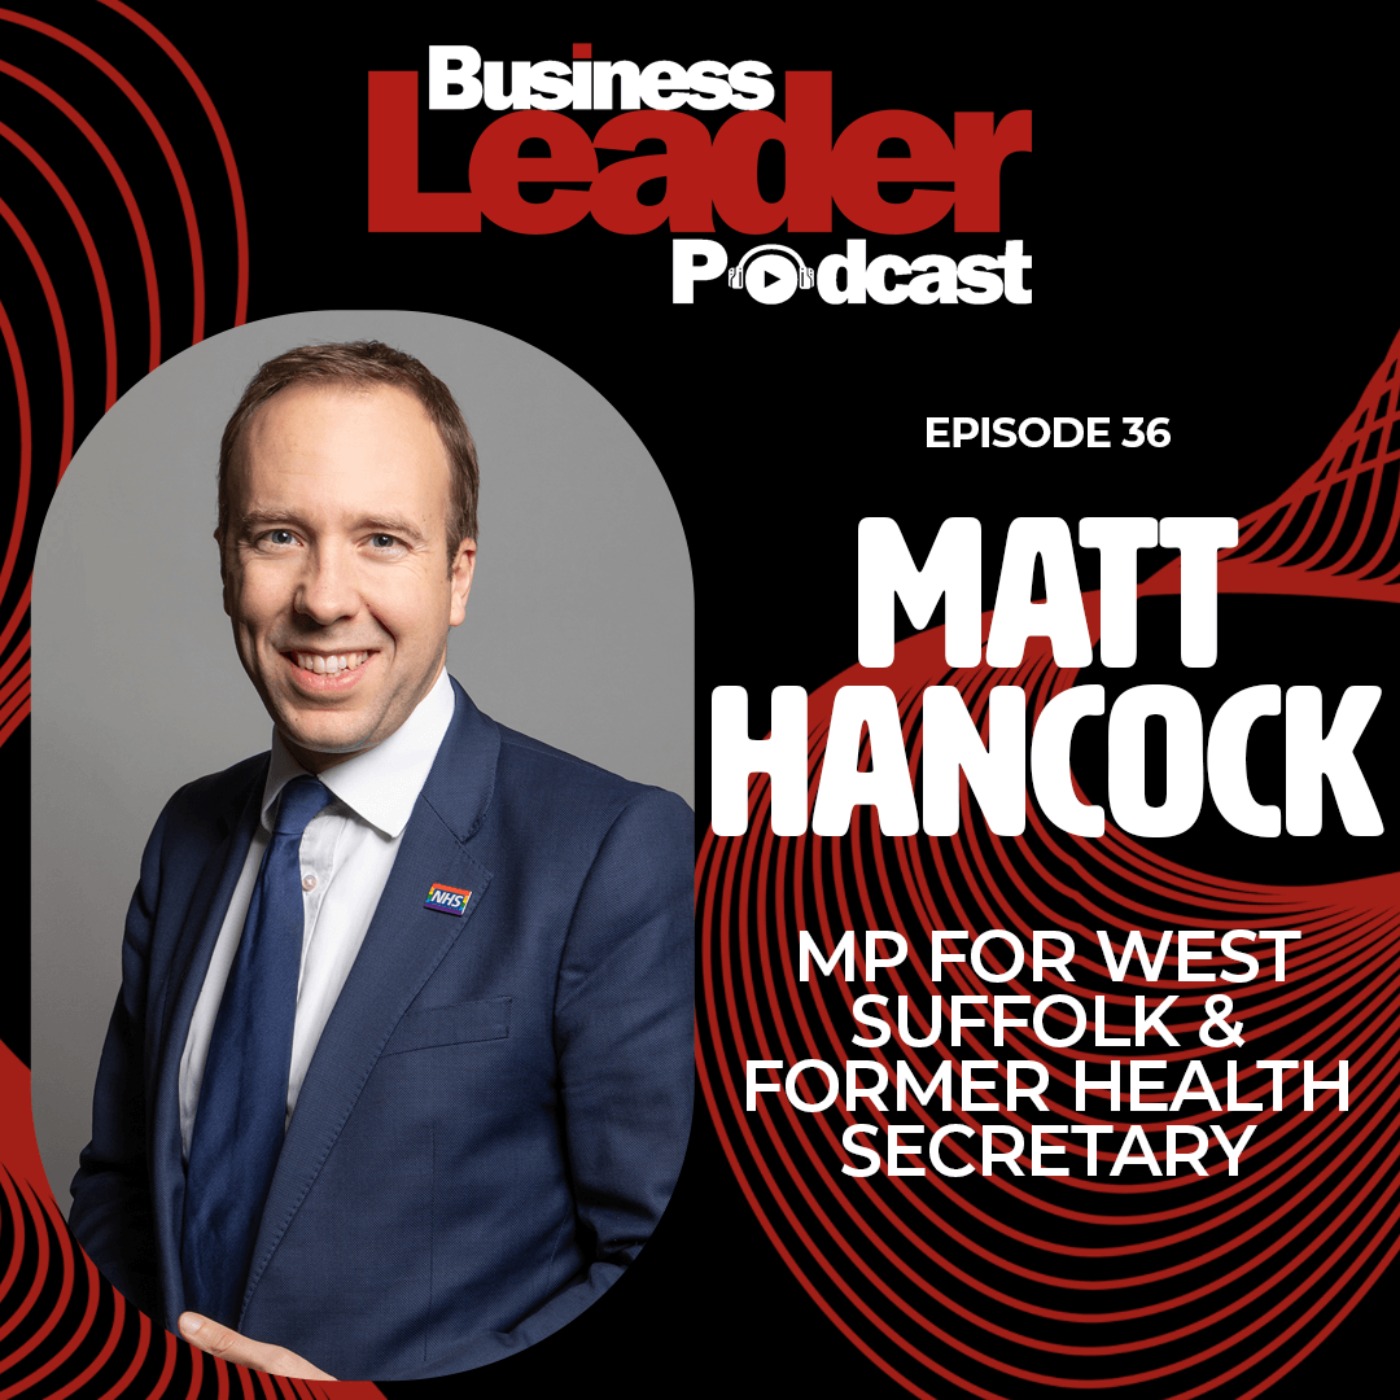 Matt Hancock: MP for West Suffolk & former Health Secretary